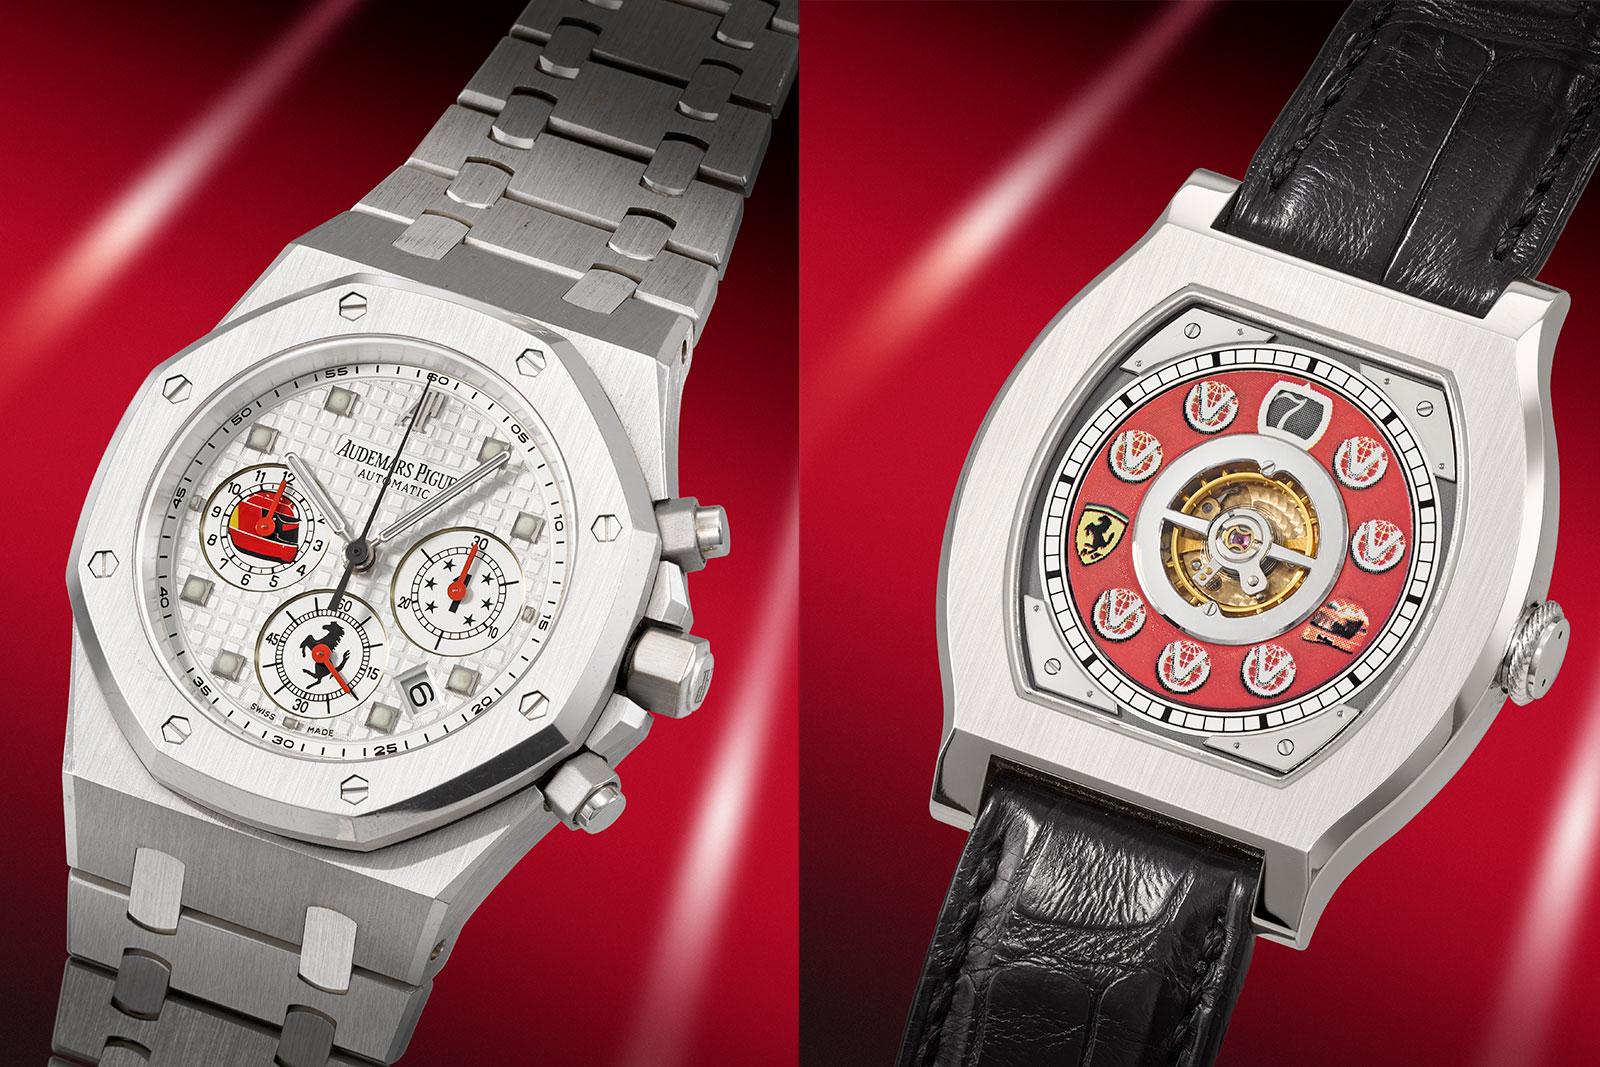 Michael Schumacher's watches fetch millions at Christie’s auction